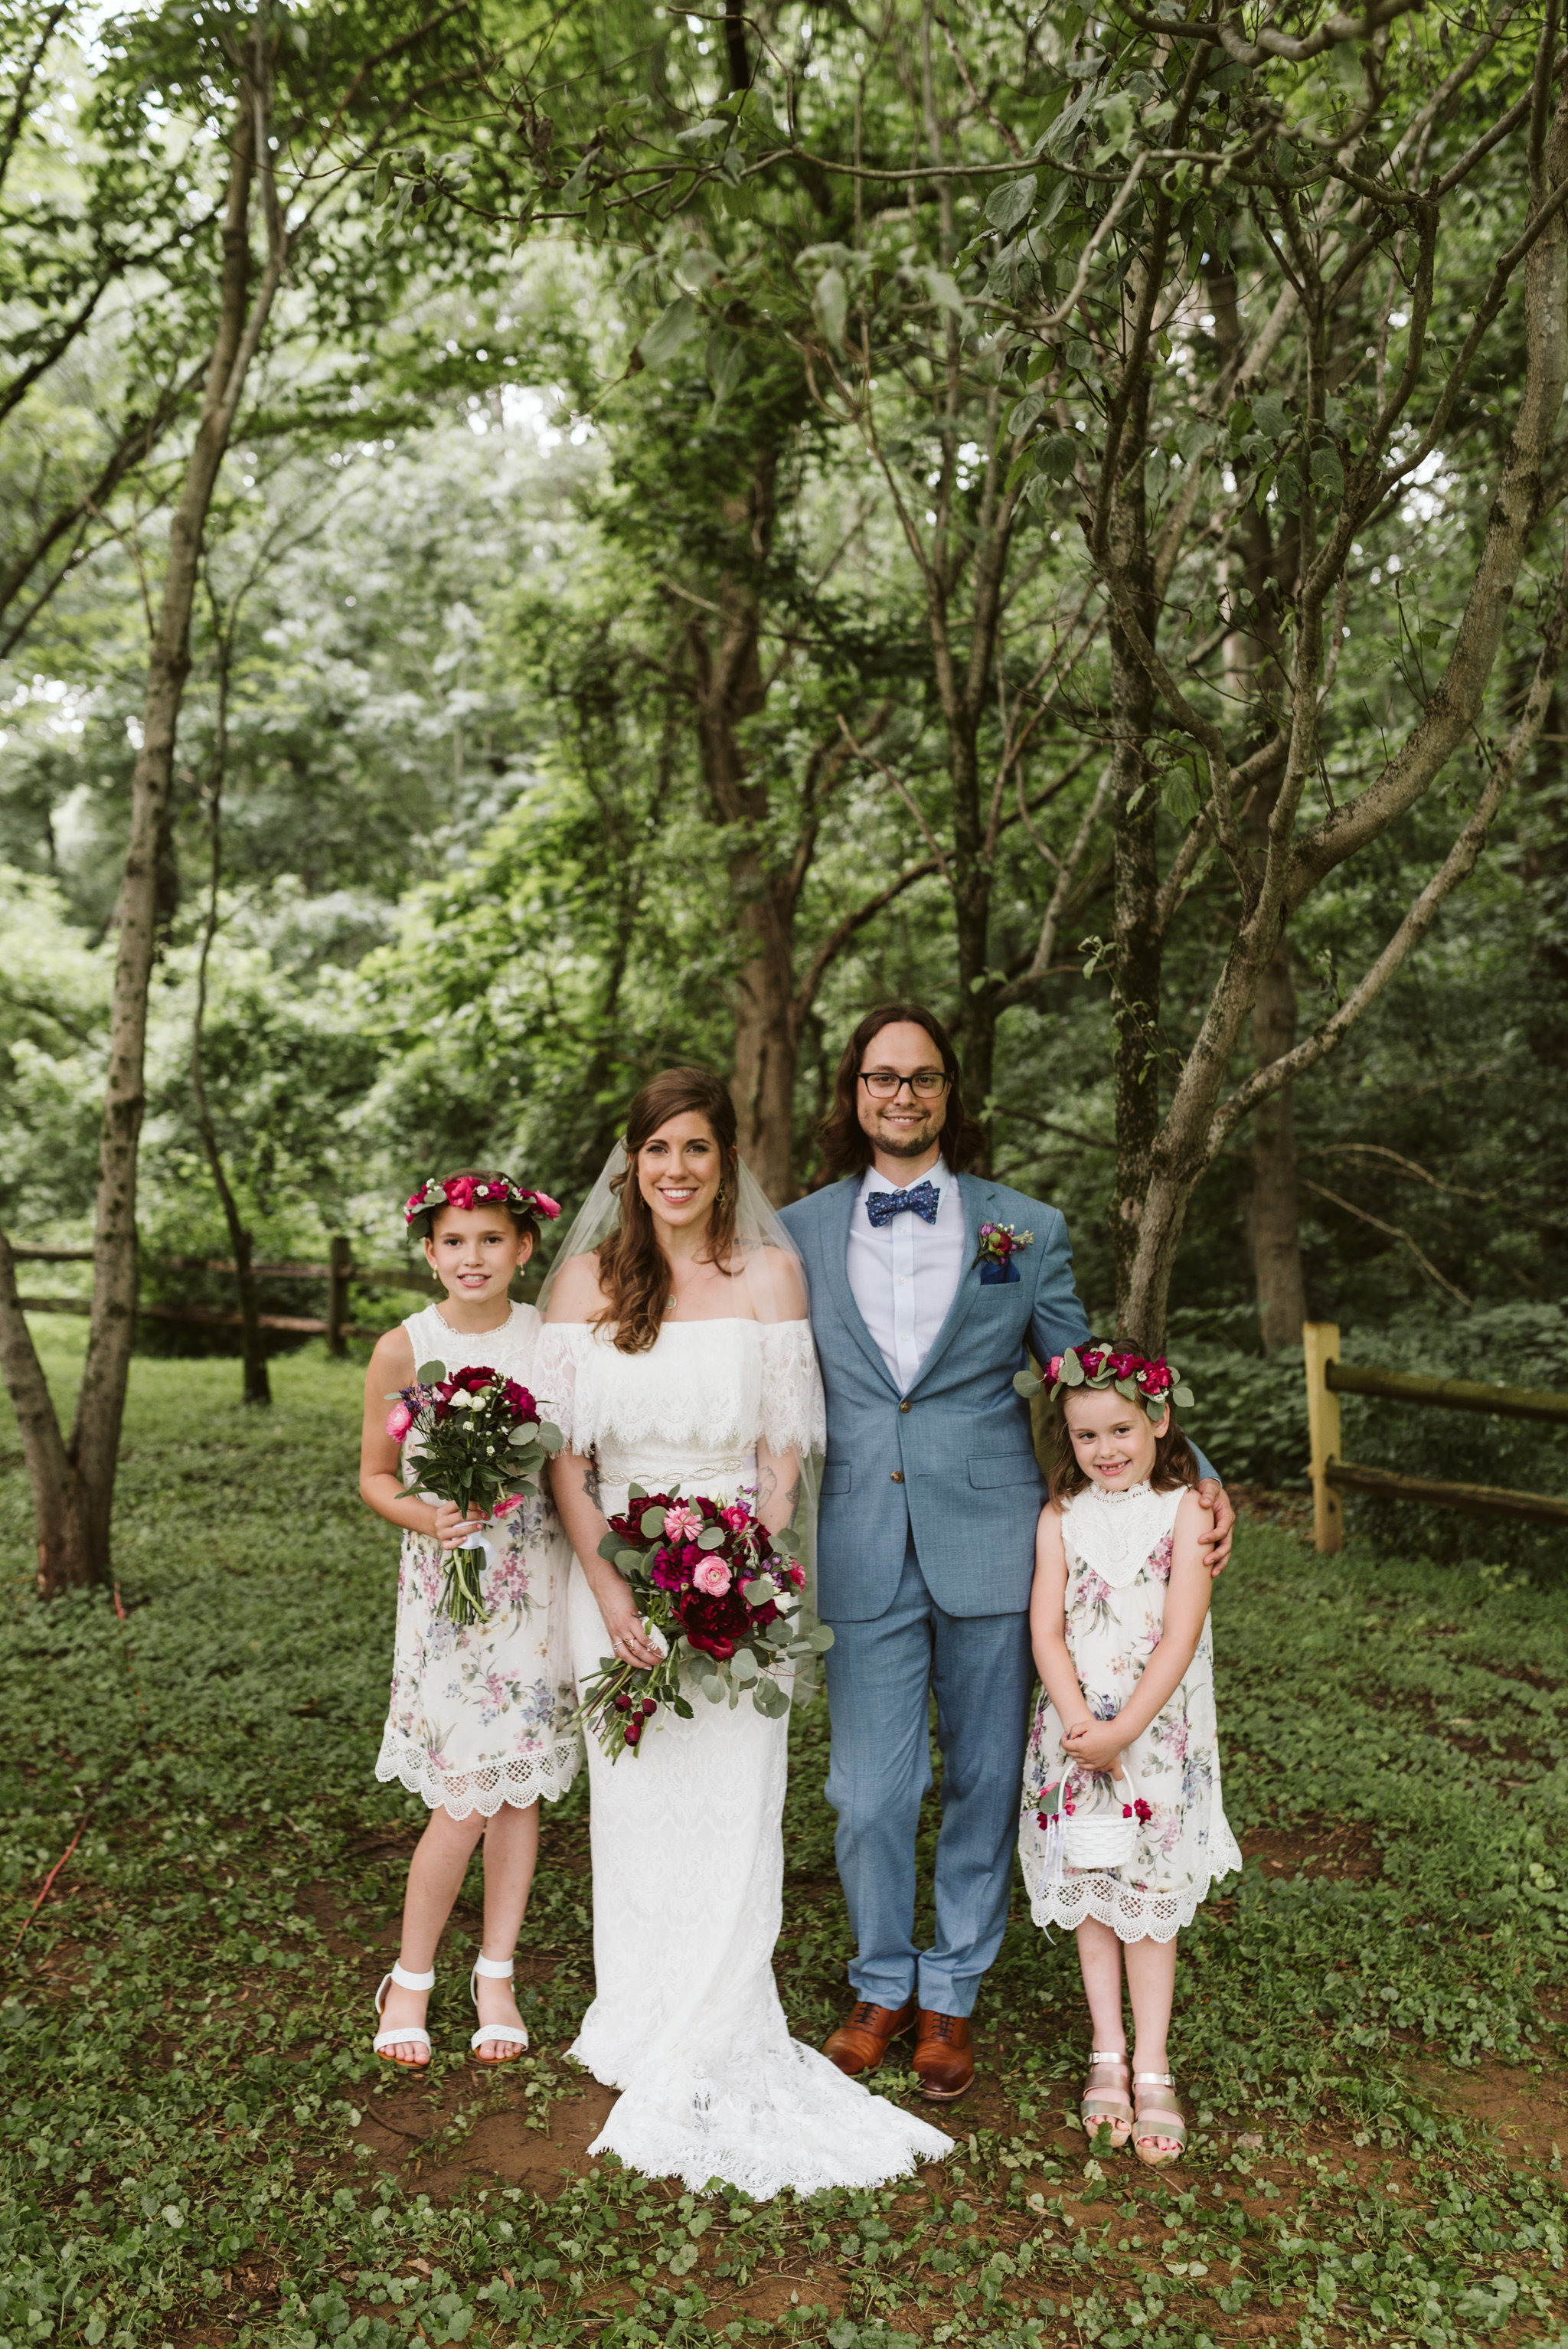  Annapolis, Quaker Wedding, Maryland Wedding Photographer, Intimate, Small Wedding, Vintage, DIY, Bride and Groom with Flower Girls, Portrait Photo 